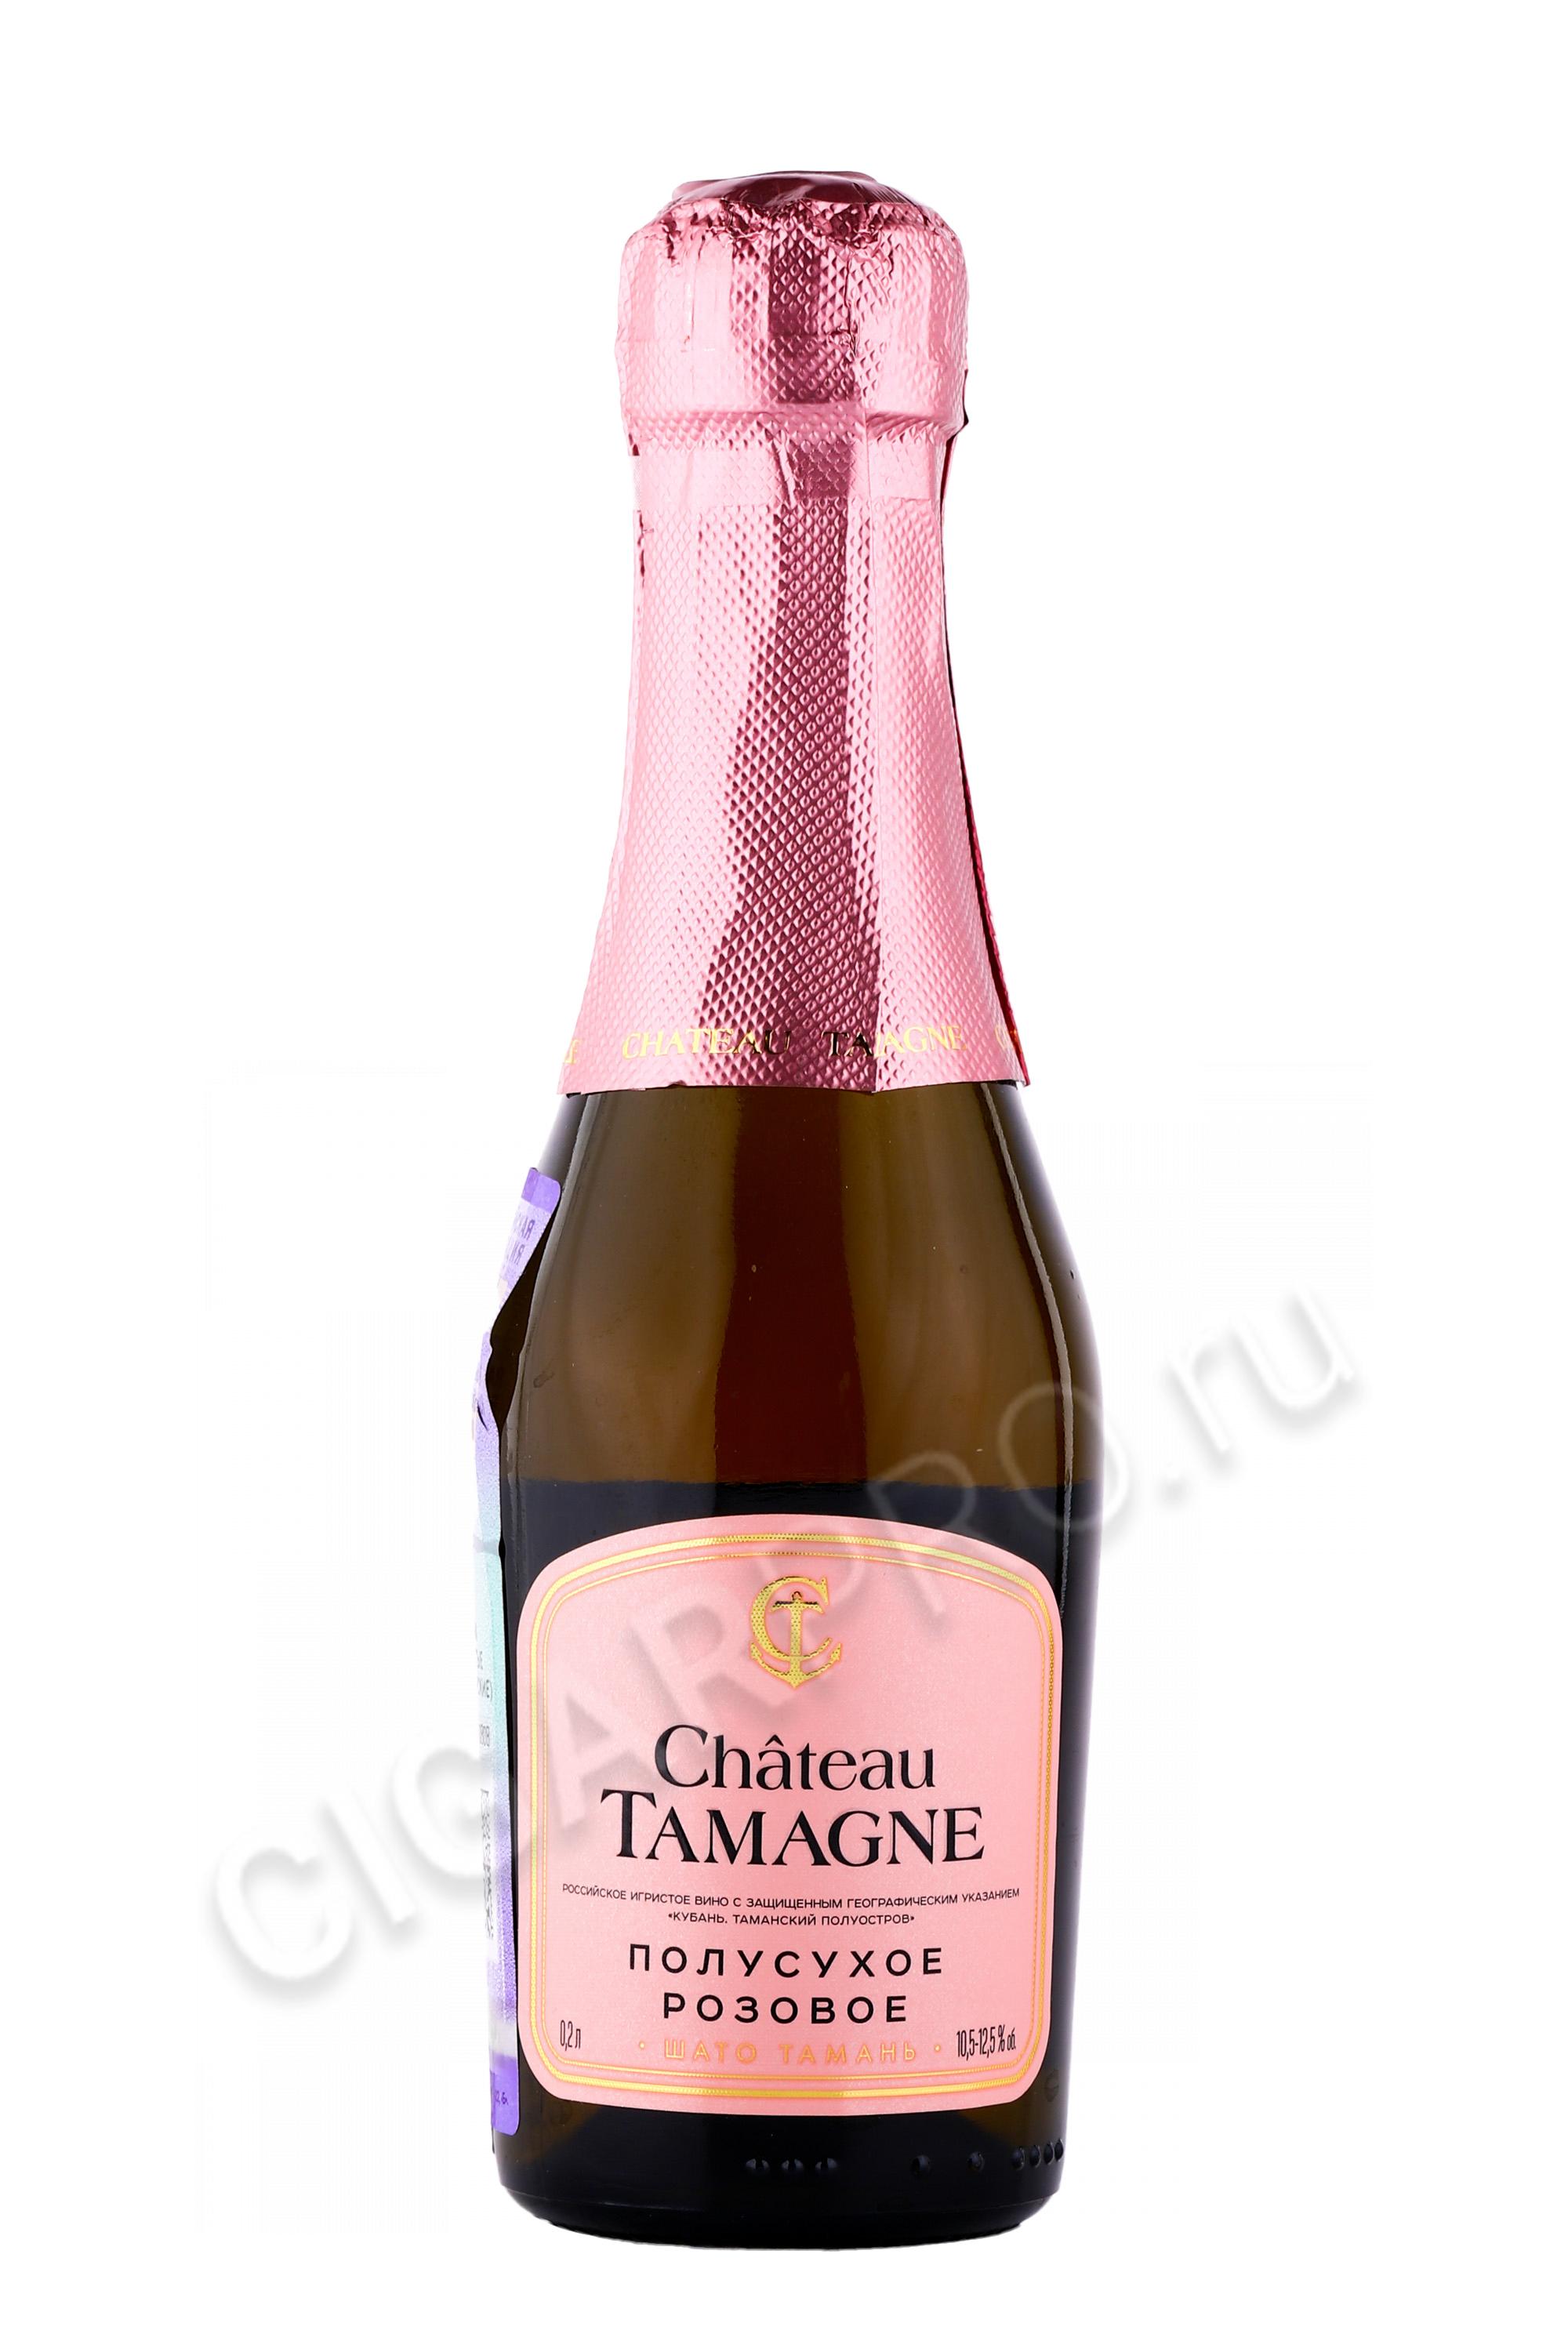 Кб тамань. Chateau Tamagne шампанское 0.2. Шато Тамань 0 2 шампанское. Вино Шато Тамань 0.